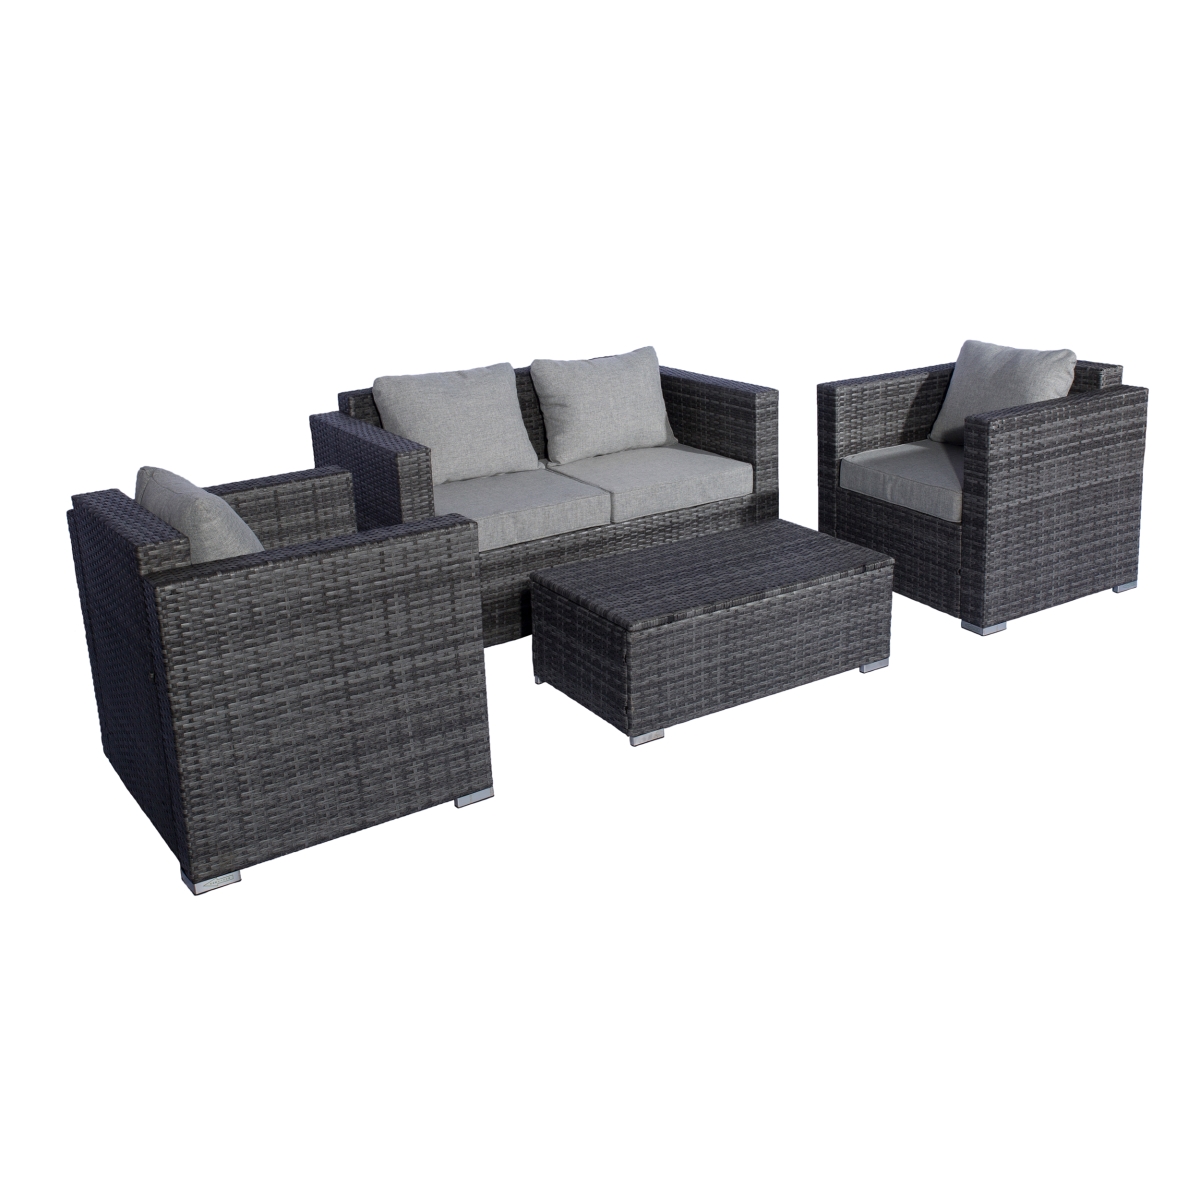 P153-01 Contemporary Sofa Set With Cushions, Gray - 4 Piece